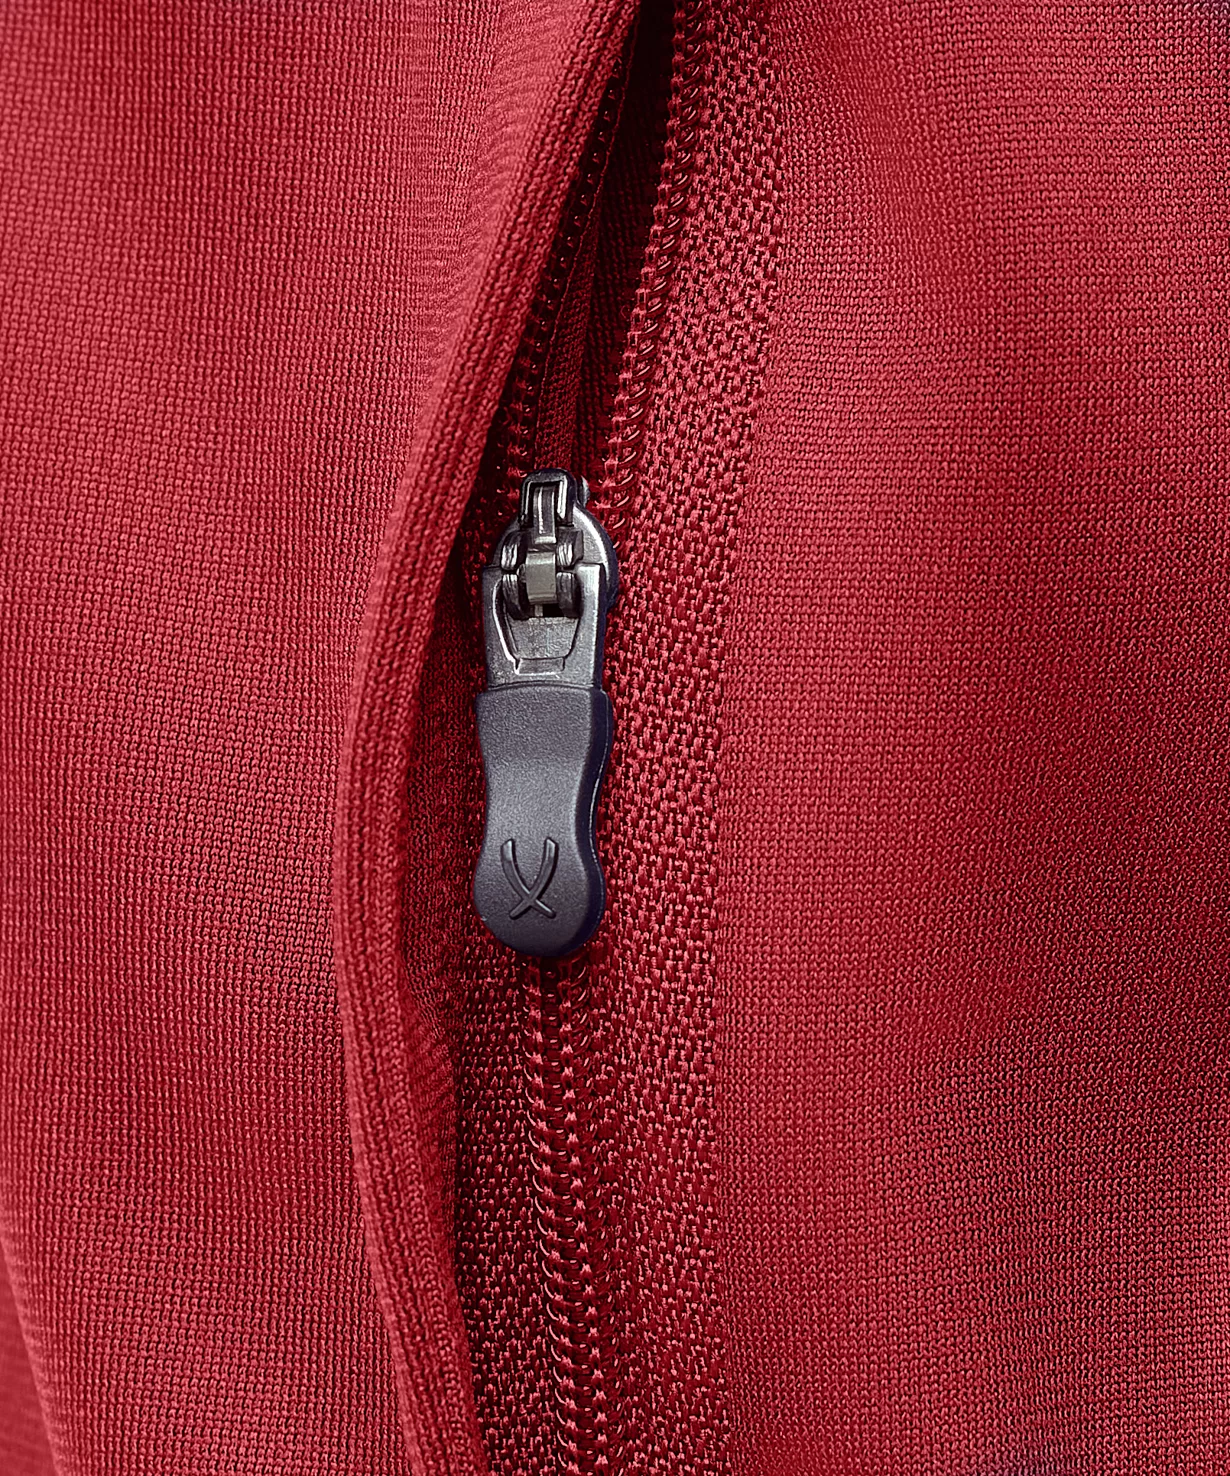 Фото Олимпийка DIVISION PerFormDRY Pre-match Knit Jacket, красный со склада магазина СпортСЕ